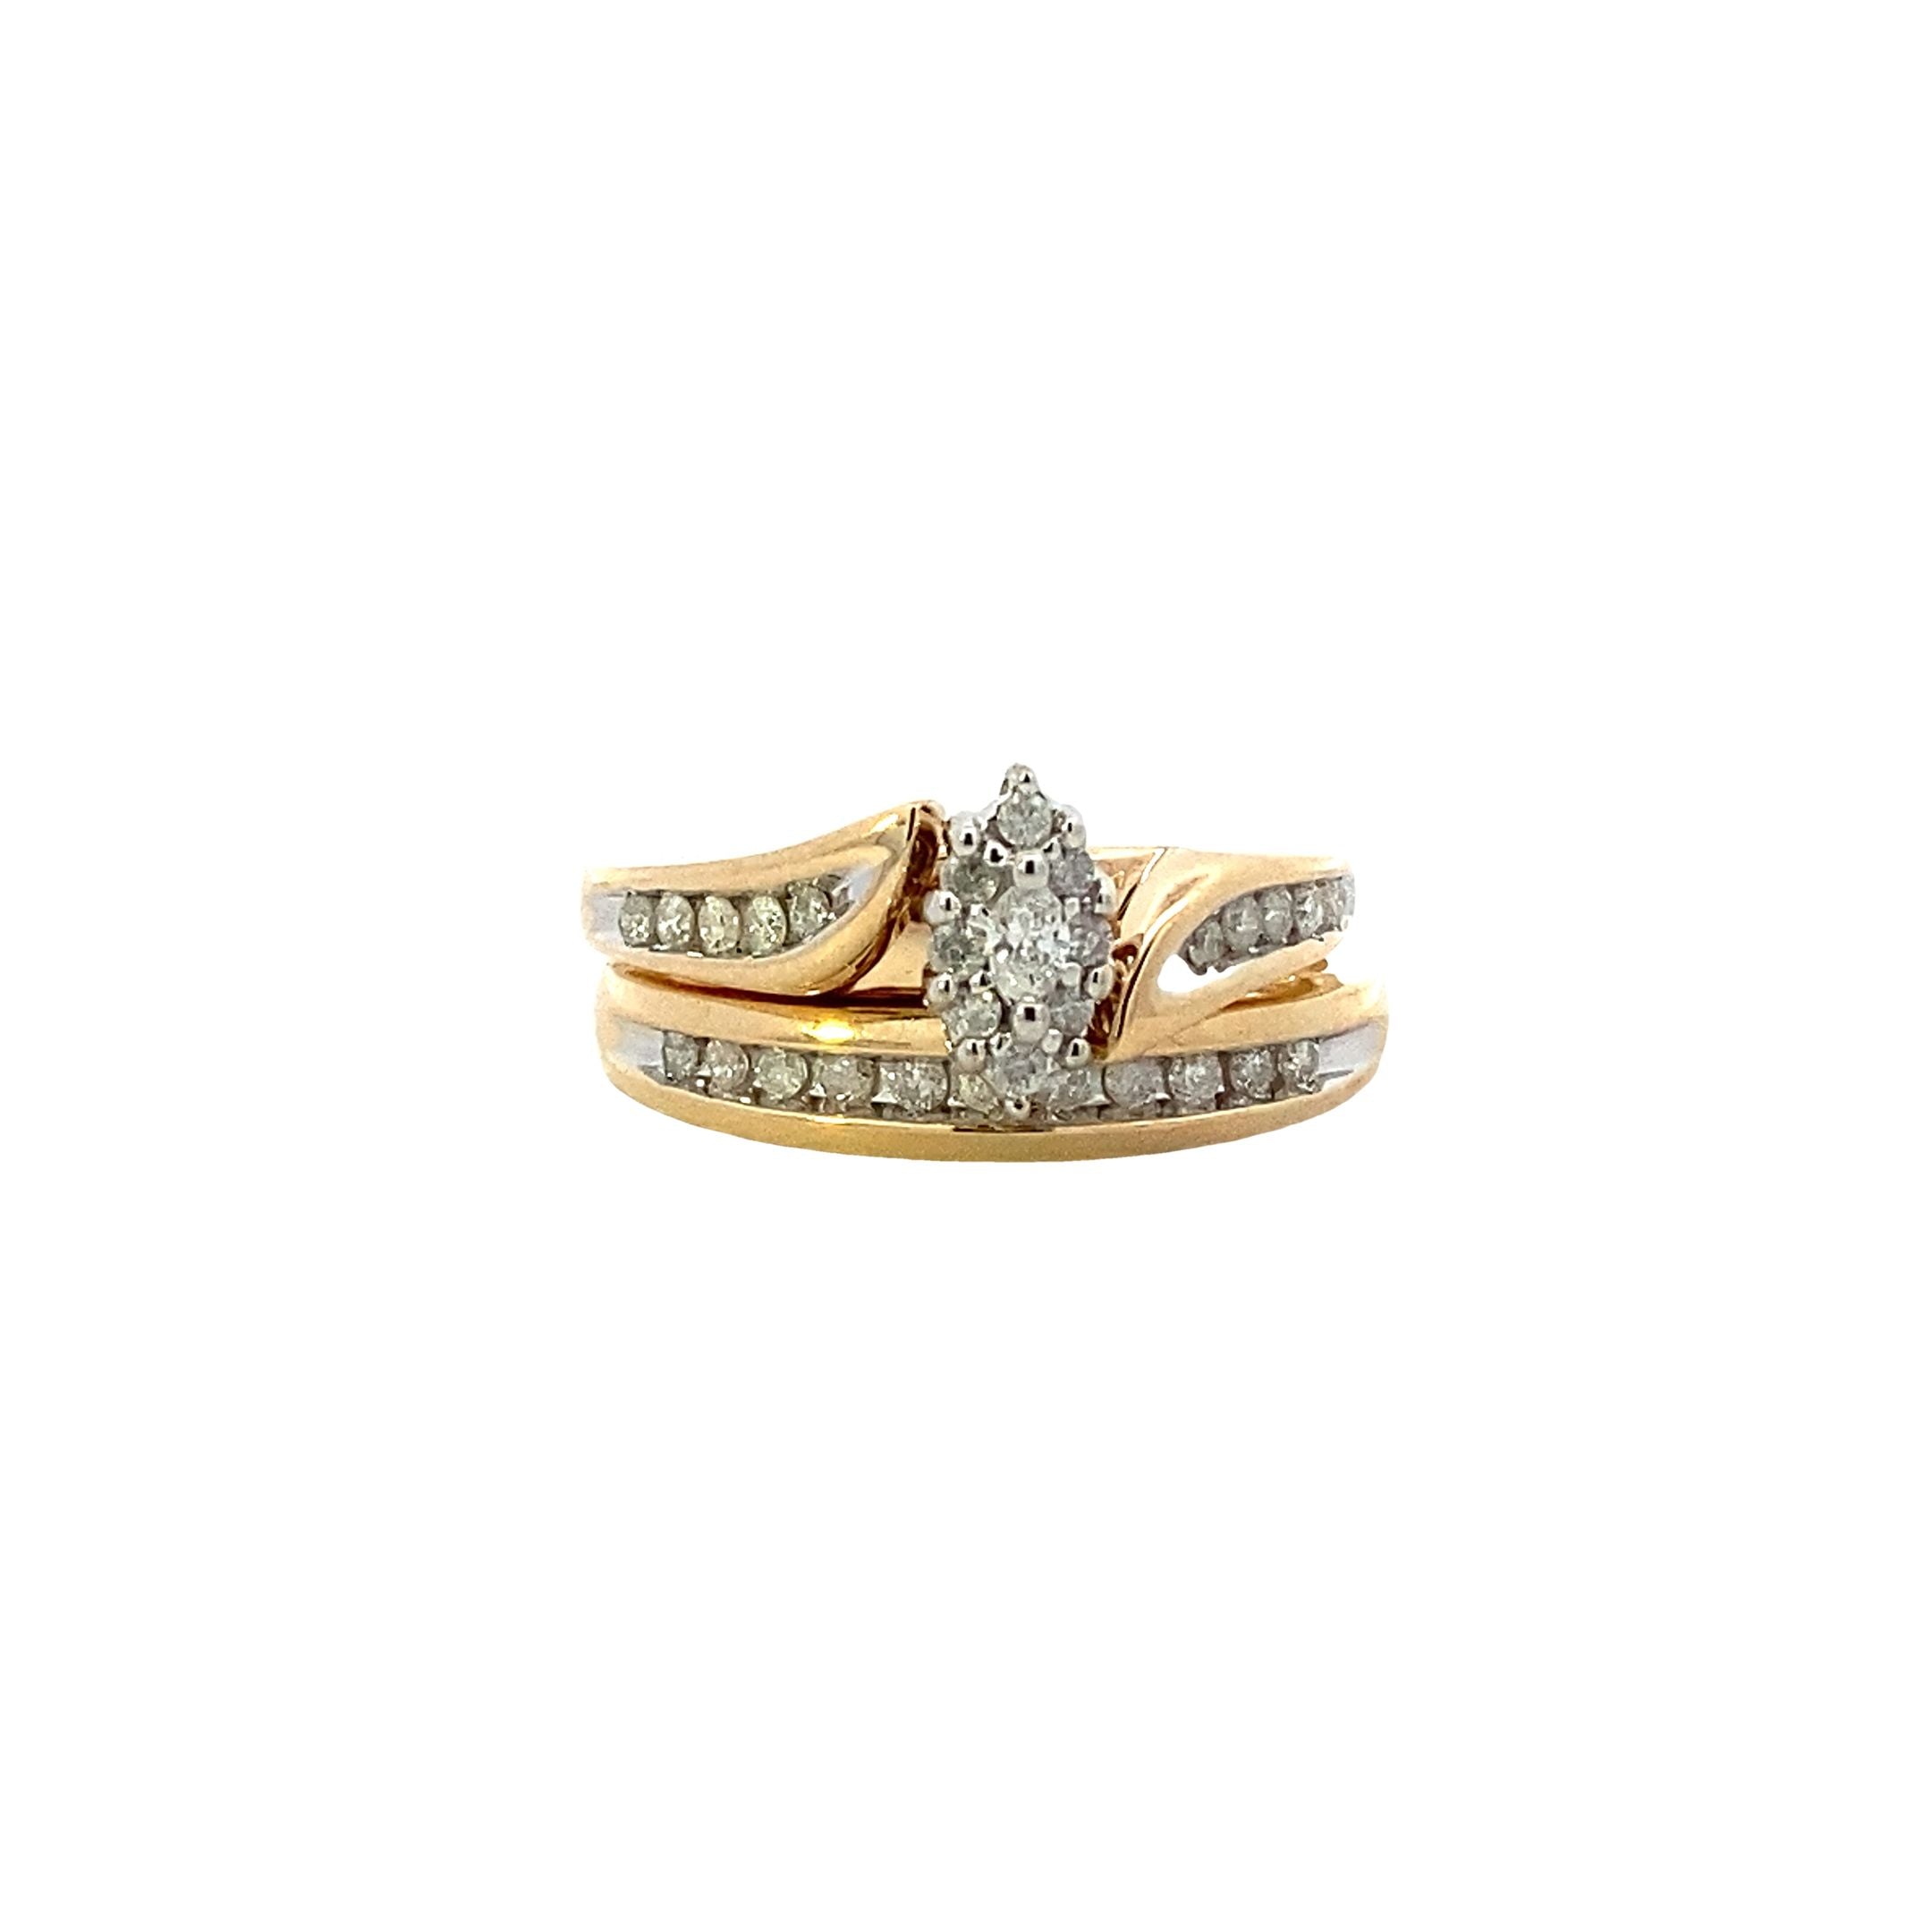 10K Yellow Gold Diamond Engagement & Wedding Ring Set - 0.39ct